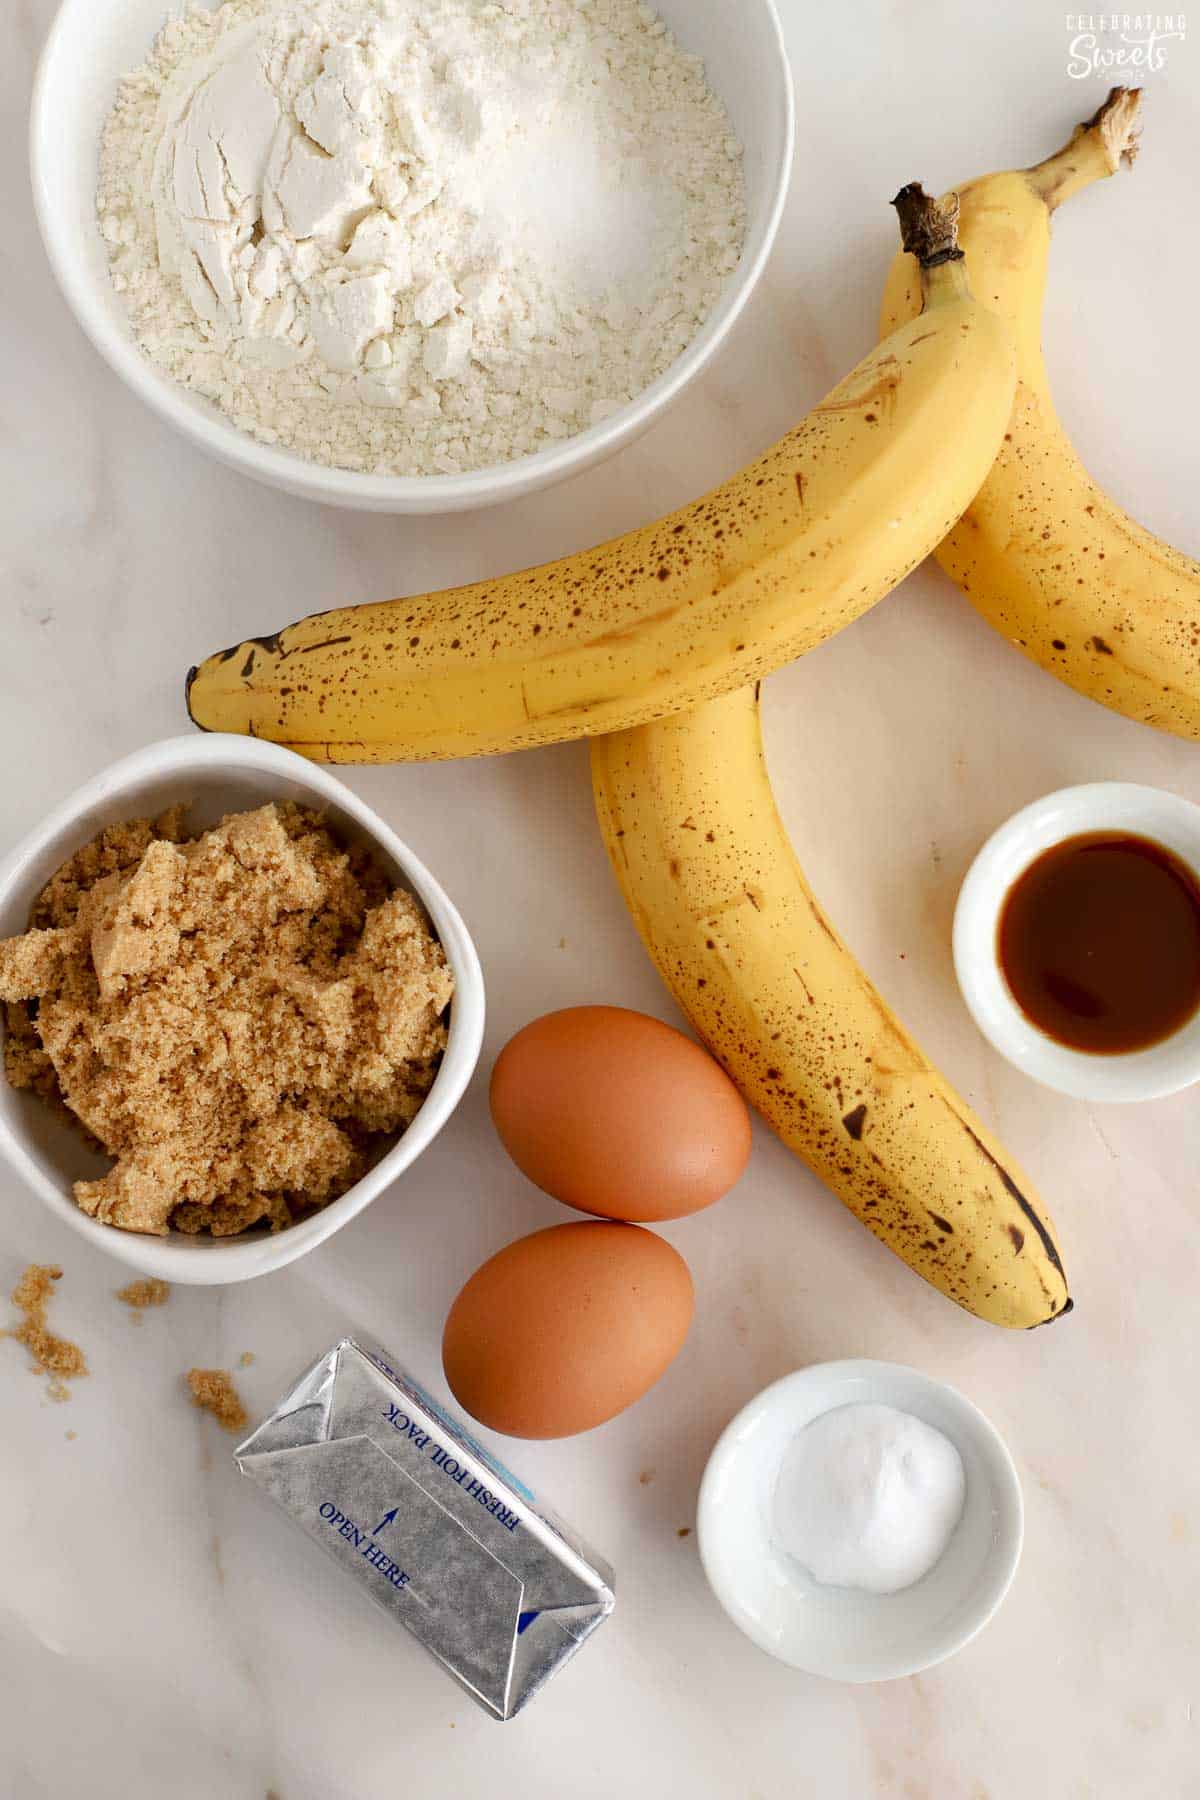 Easy Banana Bread ingredients: butter, sugar, flour, bananas, eggs baking soda.